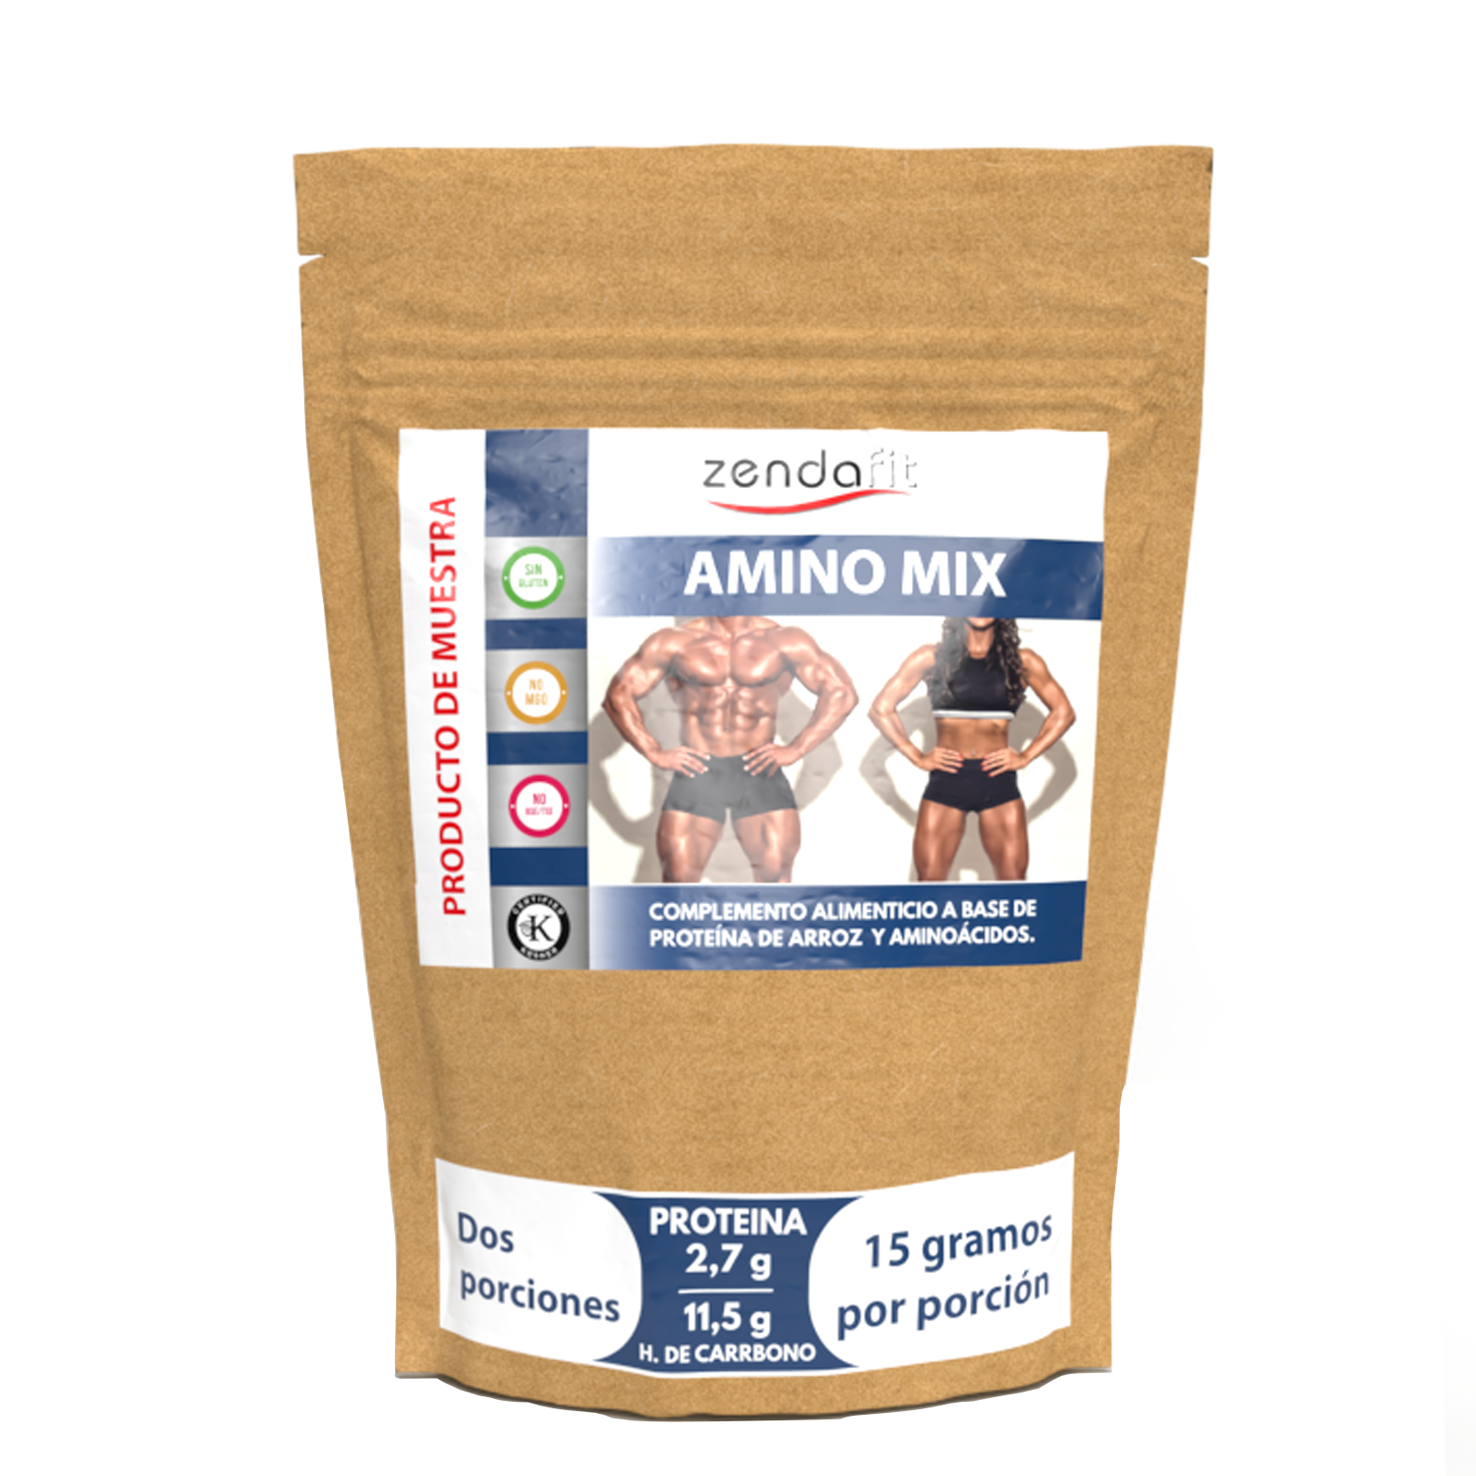 SAMPLE Amino Mix - 2 servings of 15 grams